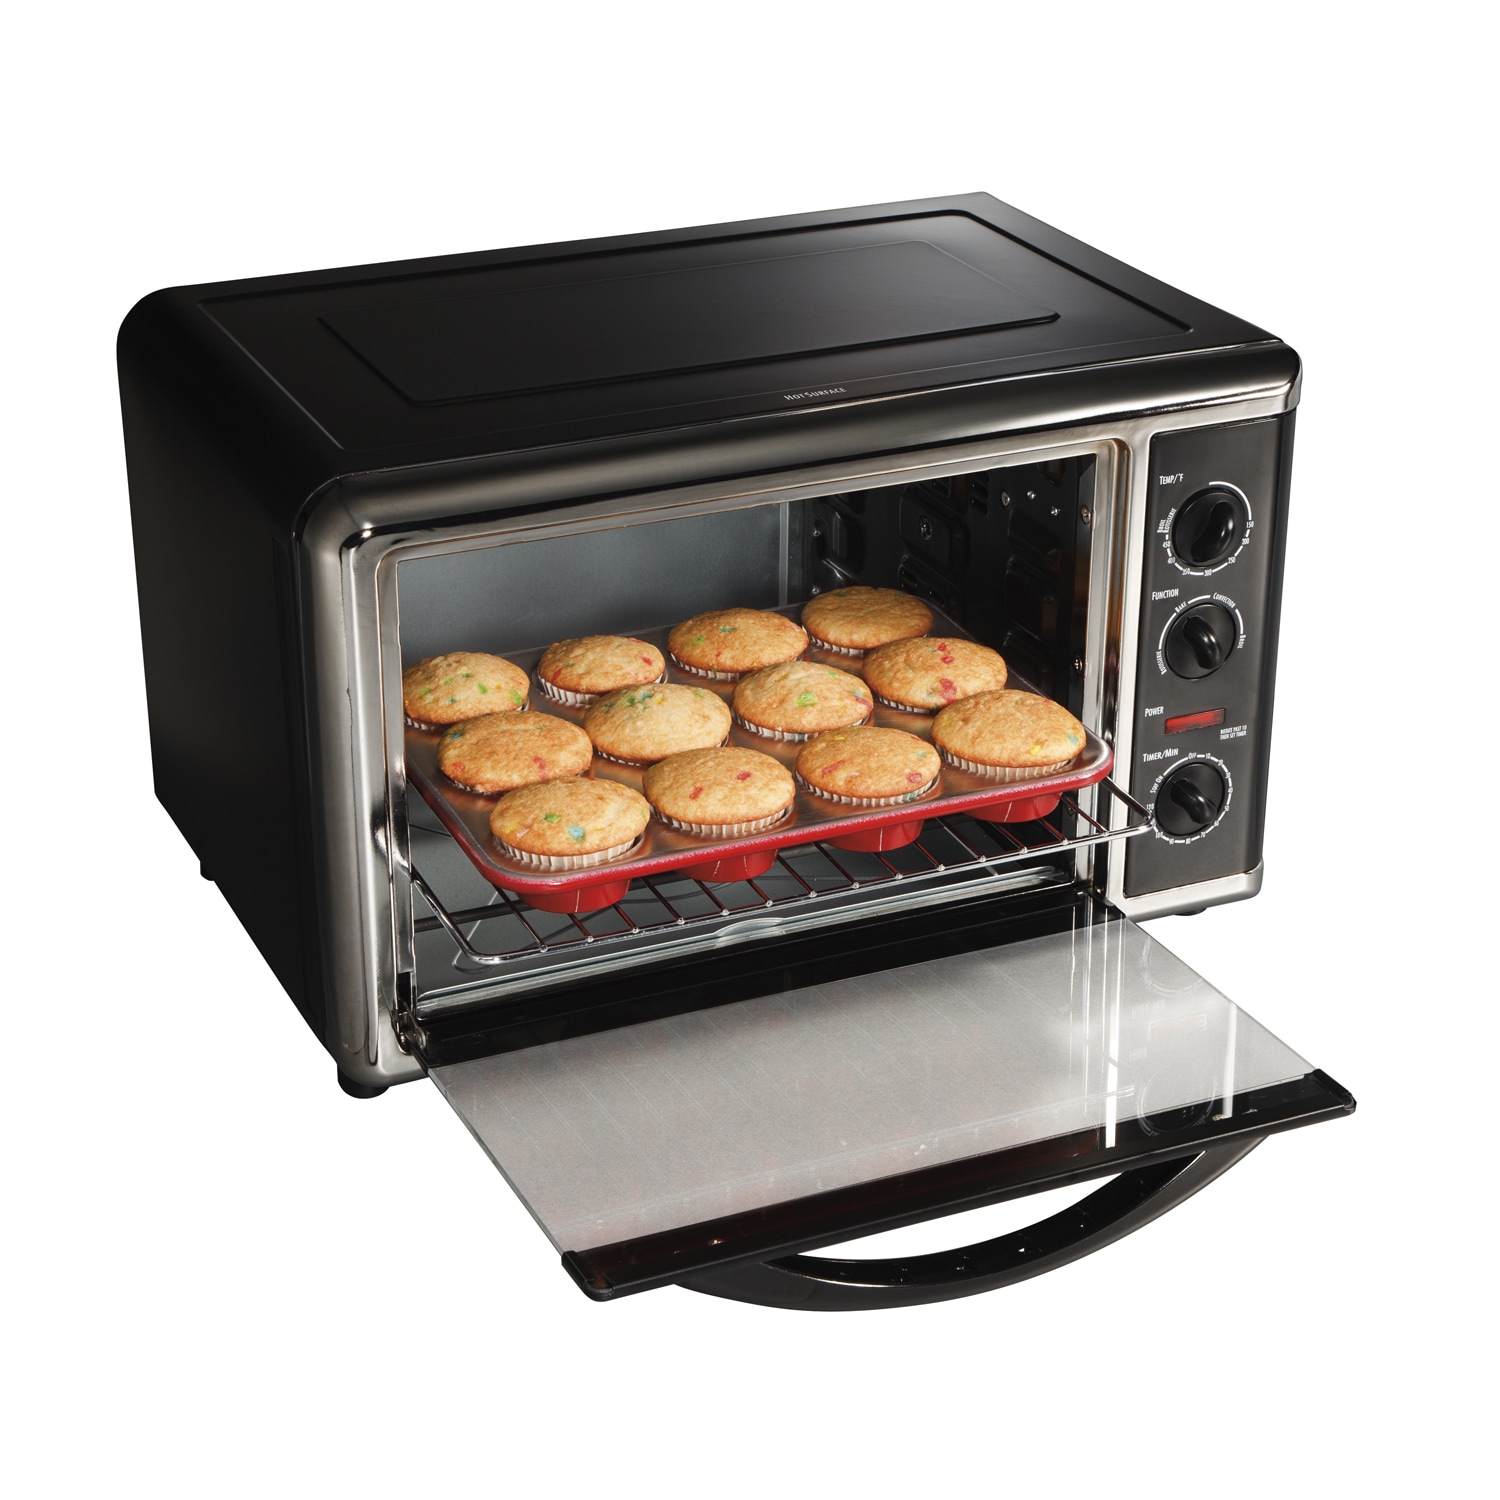 Hamilton Beach Sure Crisp Air Toaster Oven, Toasters & Ovens, Furniture &  Appliances